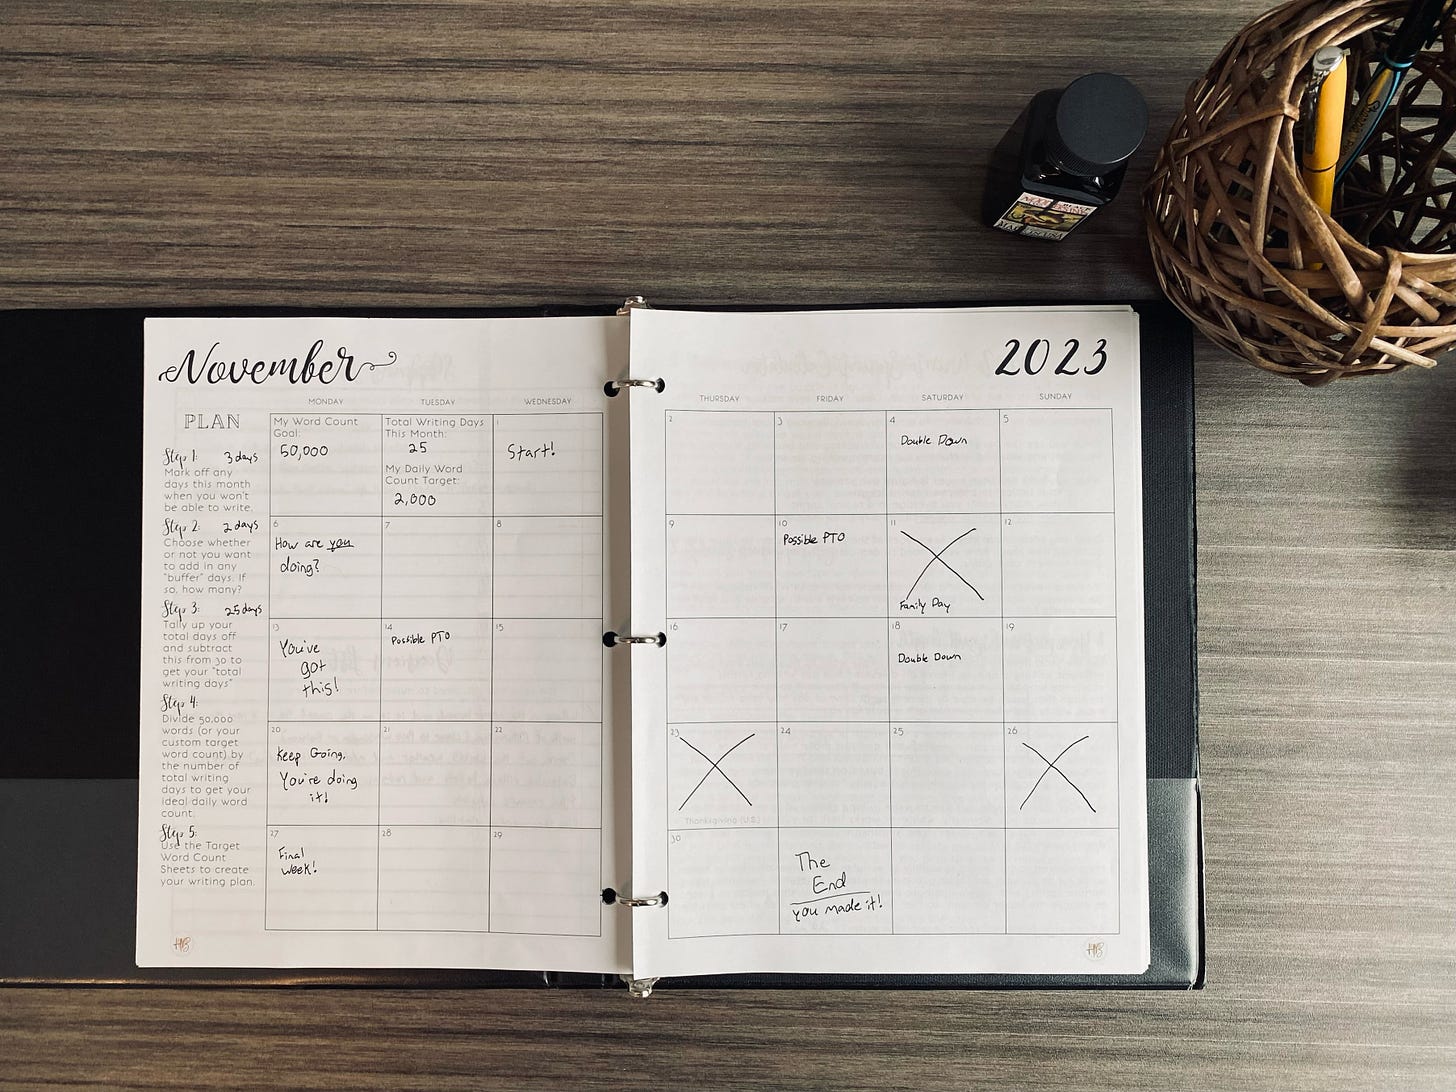 My November 2023 monthly plan in my NaNo journal